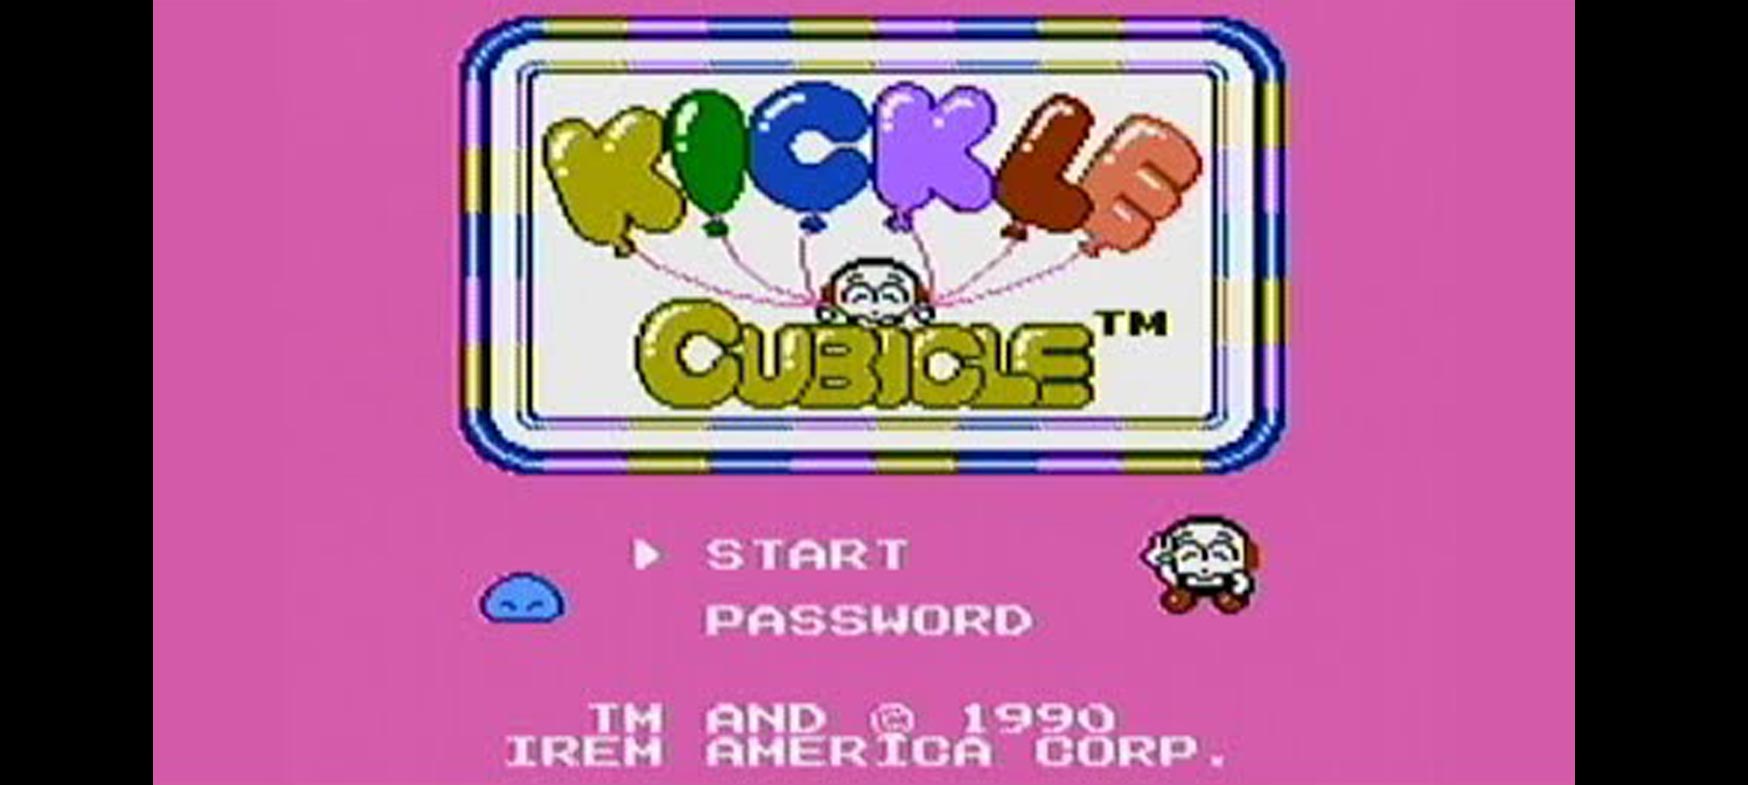 Kickle Cubicle review (NES)